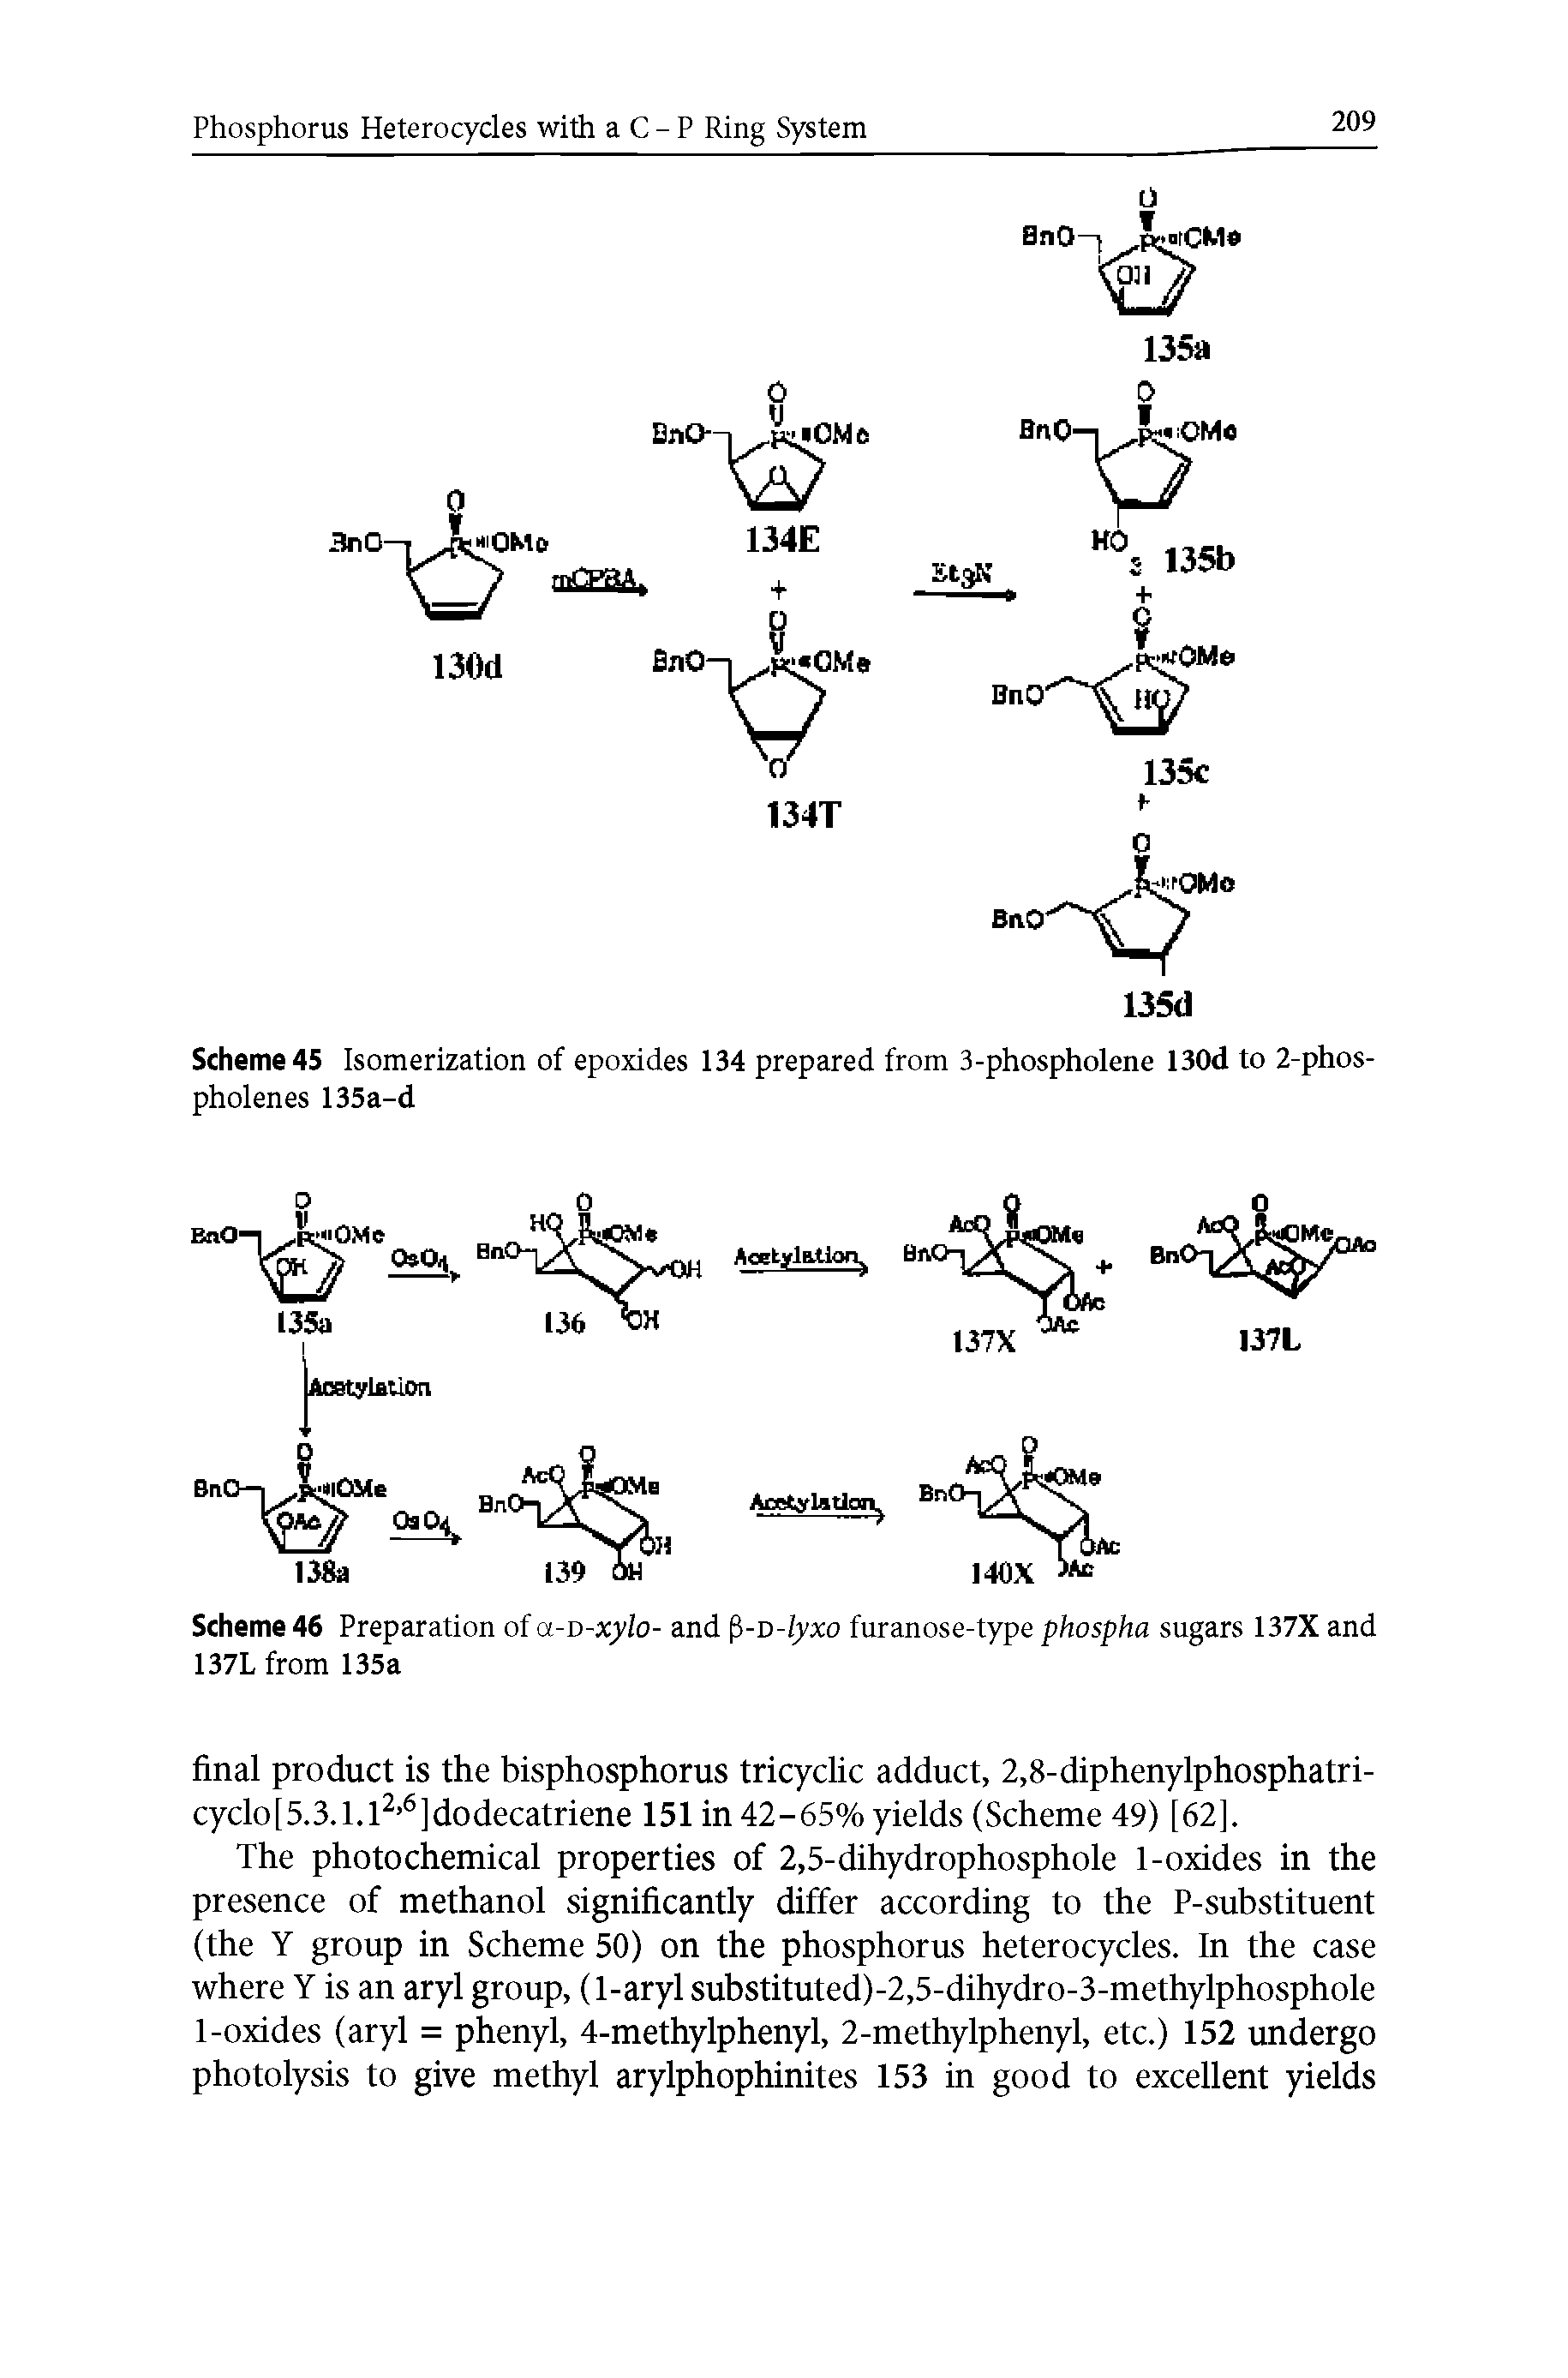 Scheme 45 Isomerization of epoxides 134 prepared from 3-phospholene 130d to 2-phos-pholenes 135a-d...